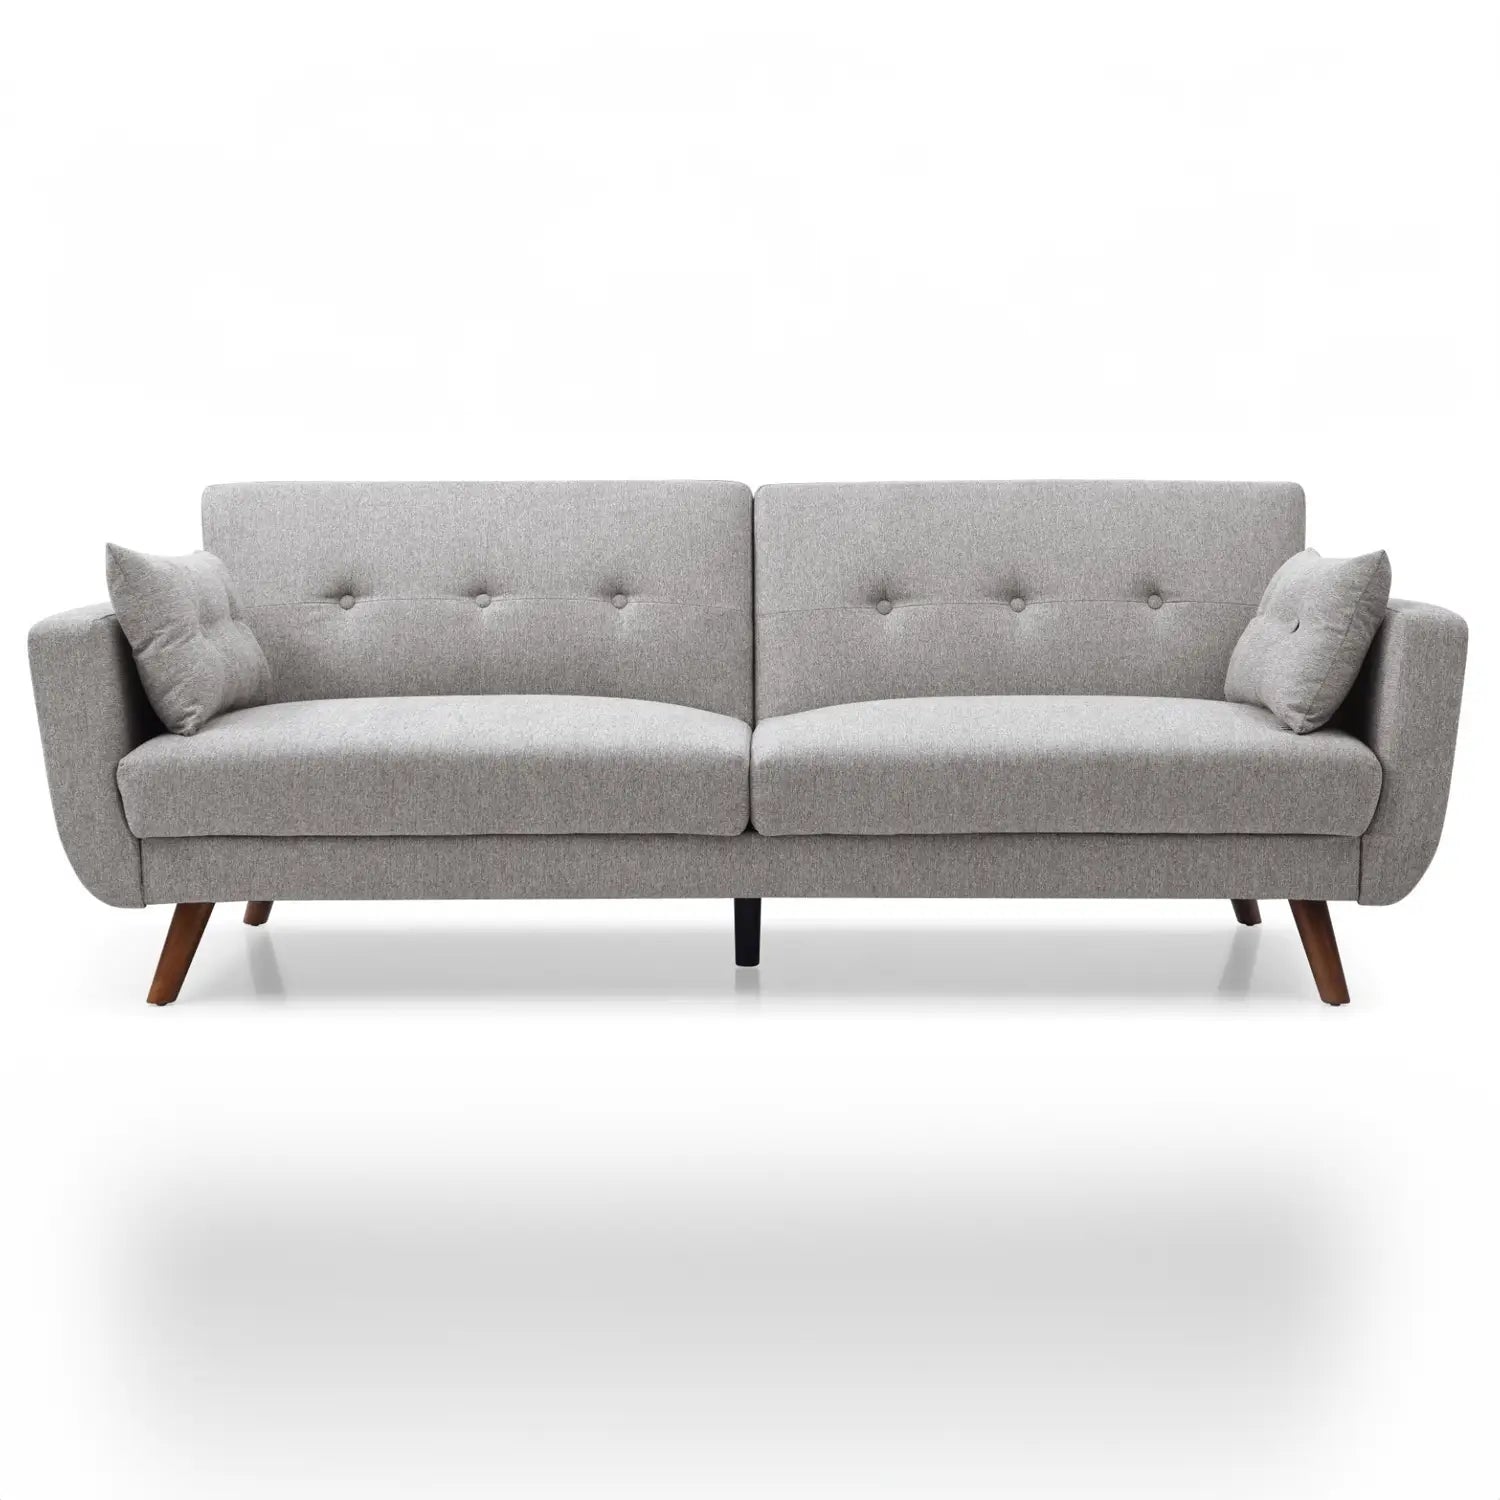 Hestia Grey Plush Velvet Fabric 3 Seater Sofa Bed